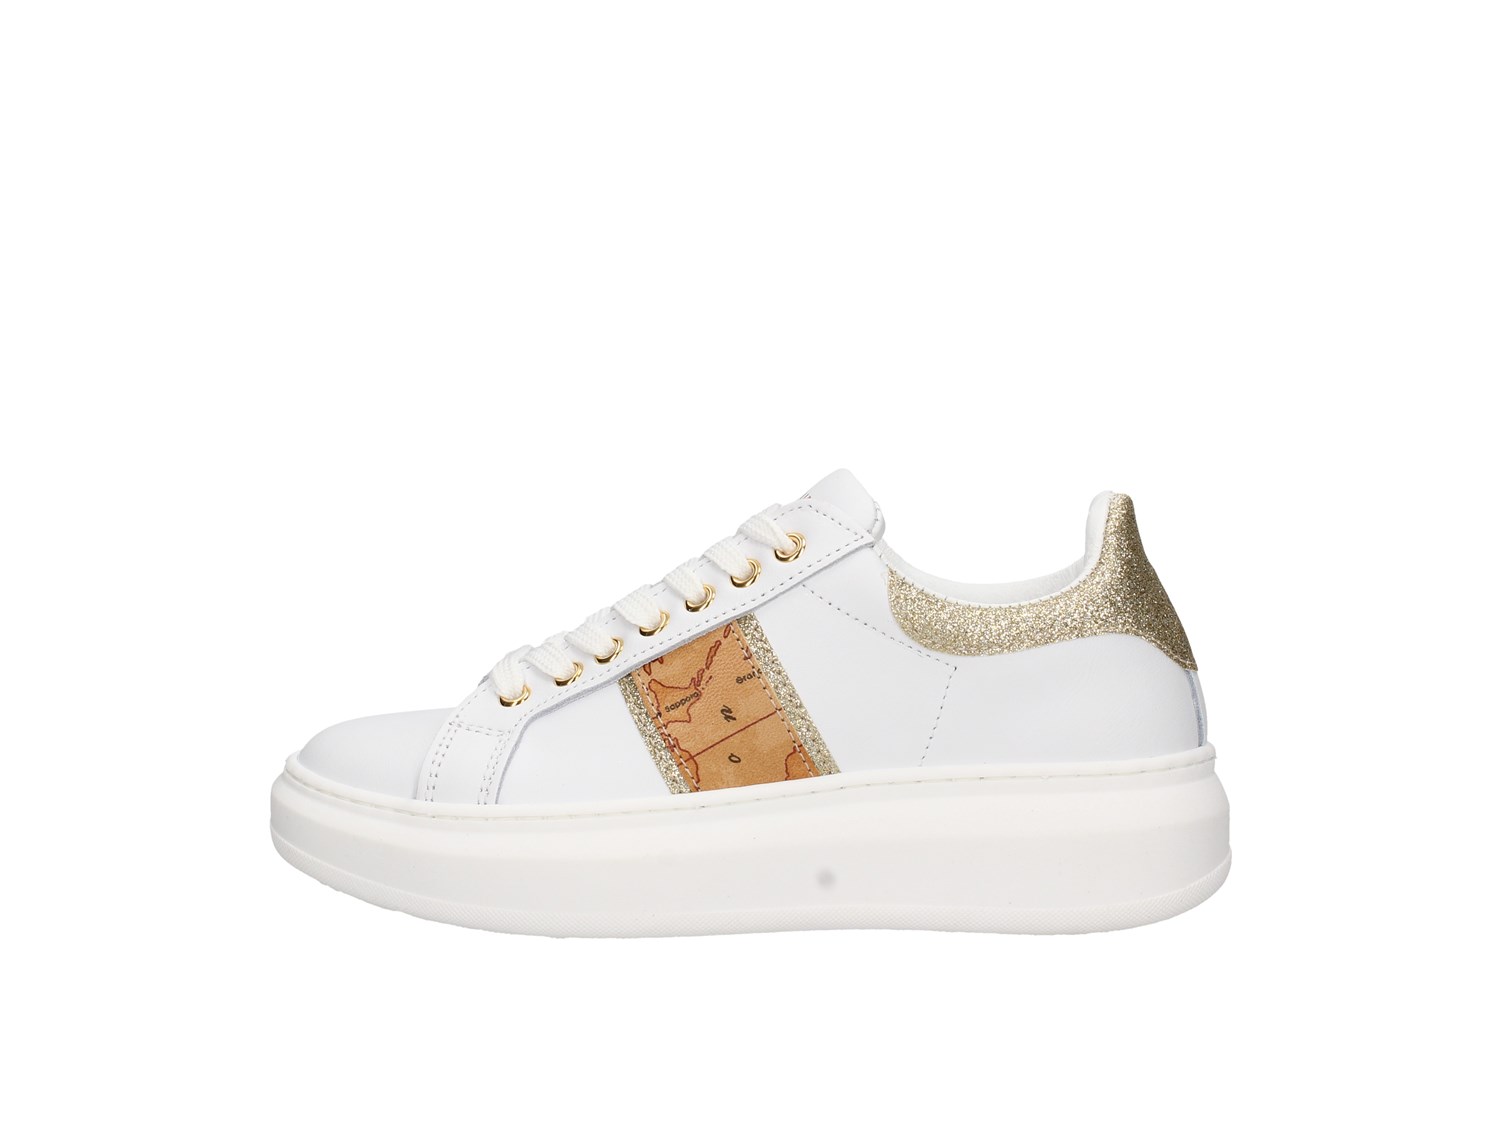 Alviero Martini 0286 578l White Shoes Women Sneakers